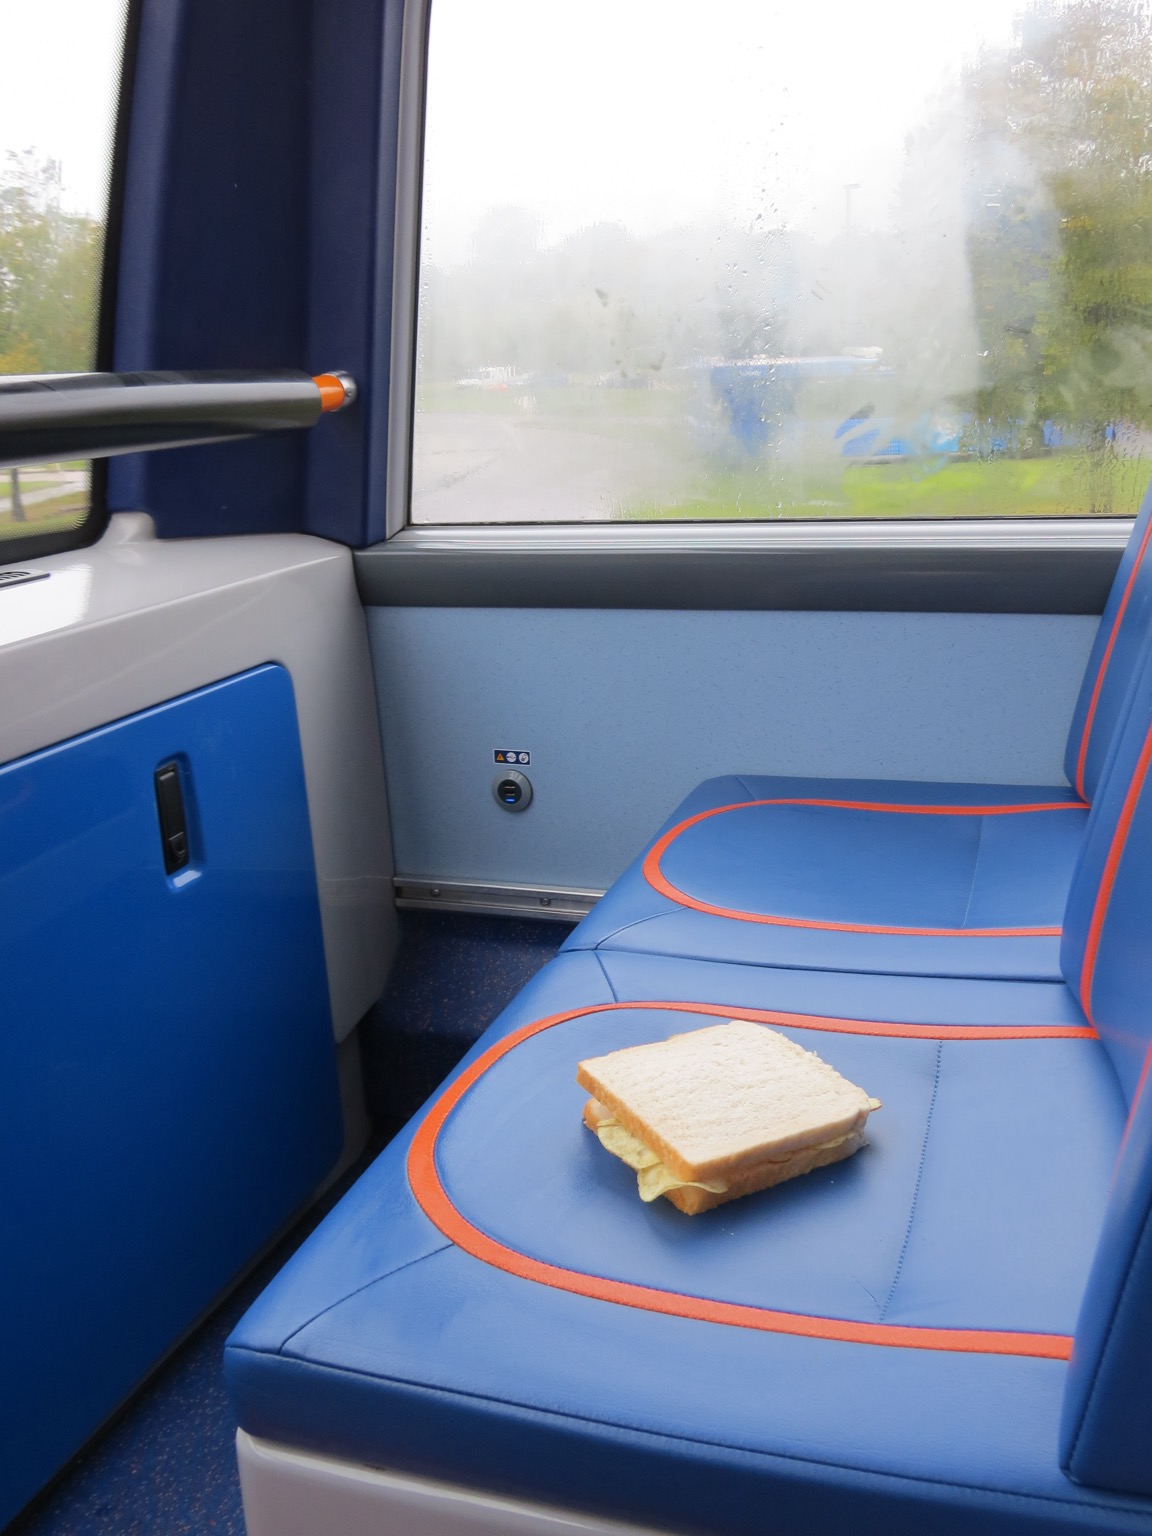 Bus seat with a potato crisp sandwich placed on it